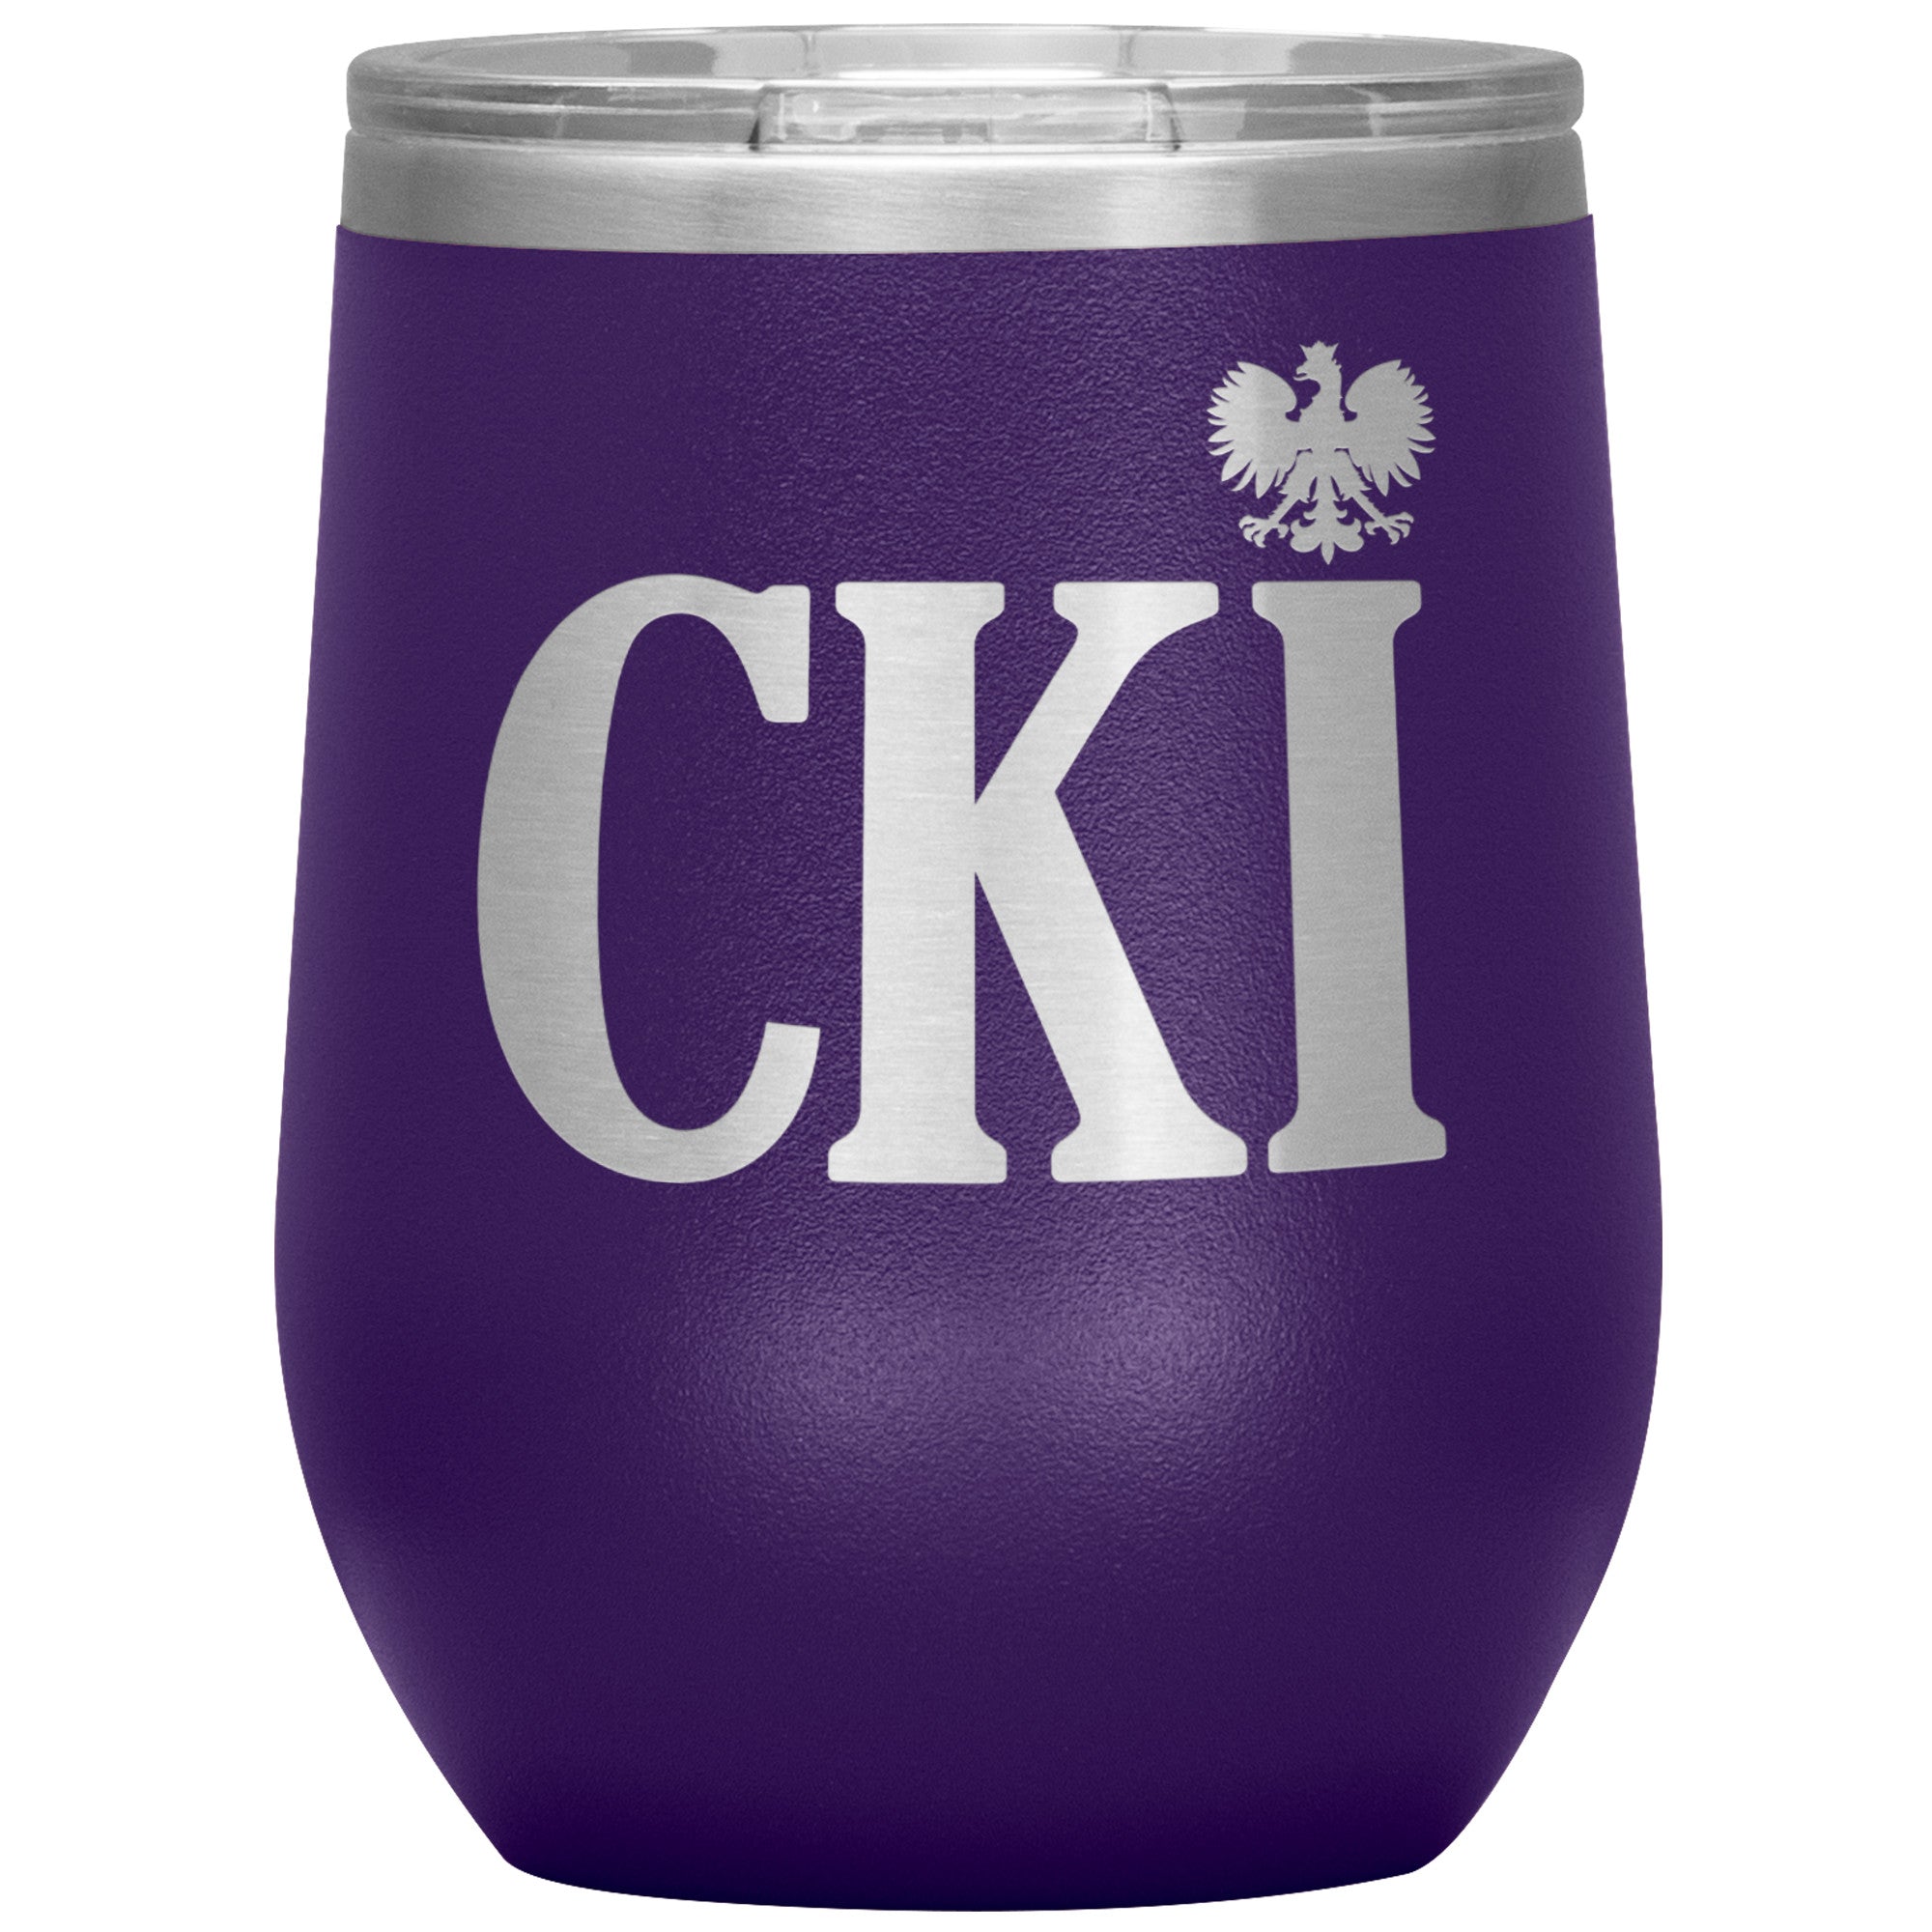 Polish Surname Ending in CKI Insulated Wine Tumbler Tumblers teelaunch Purple  